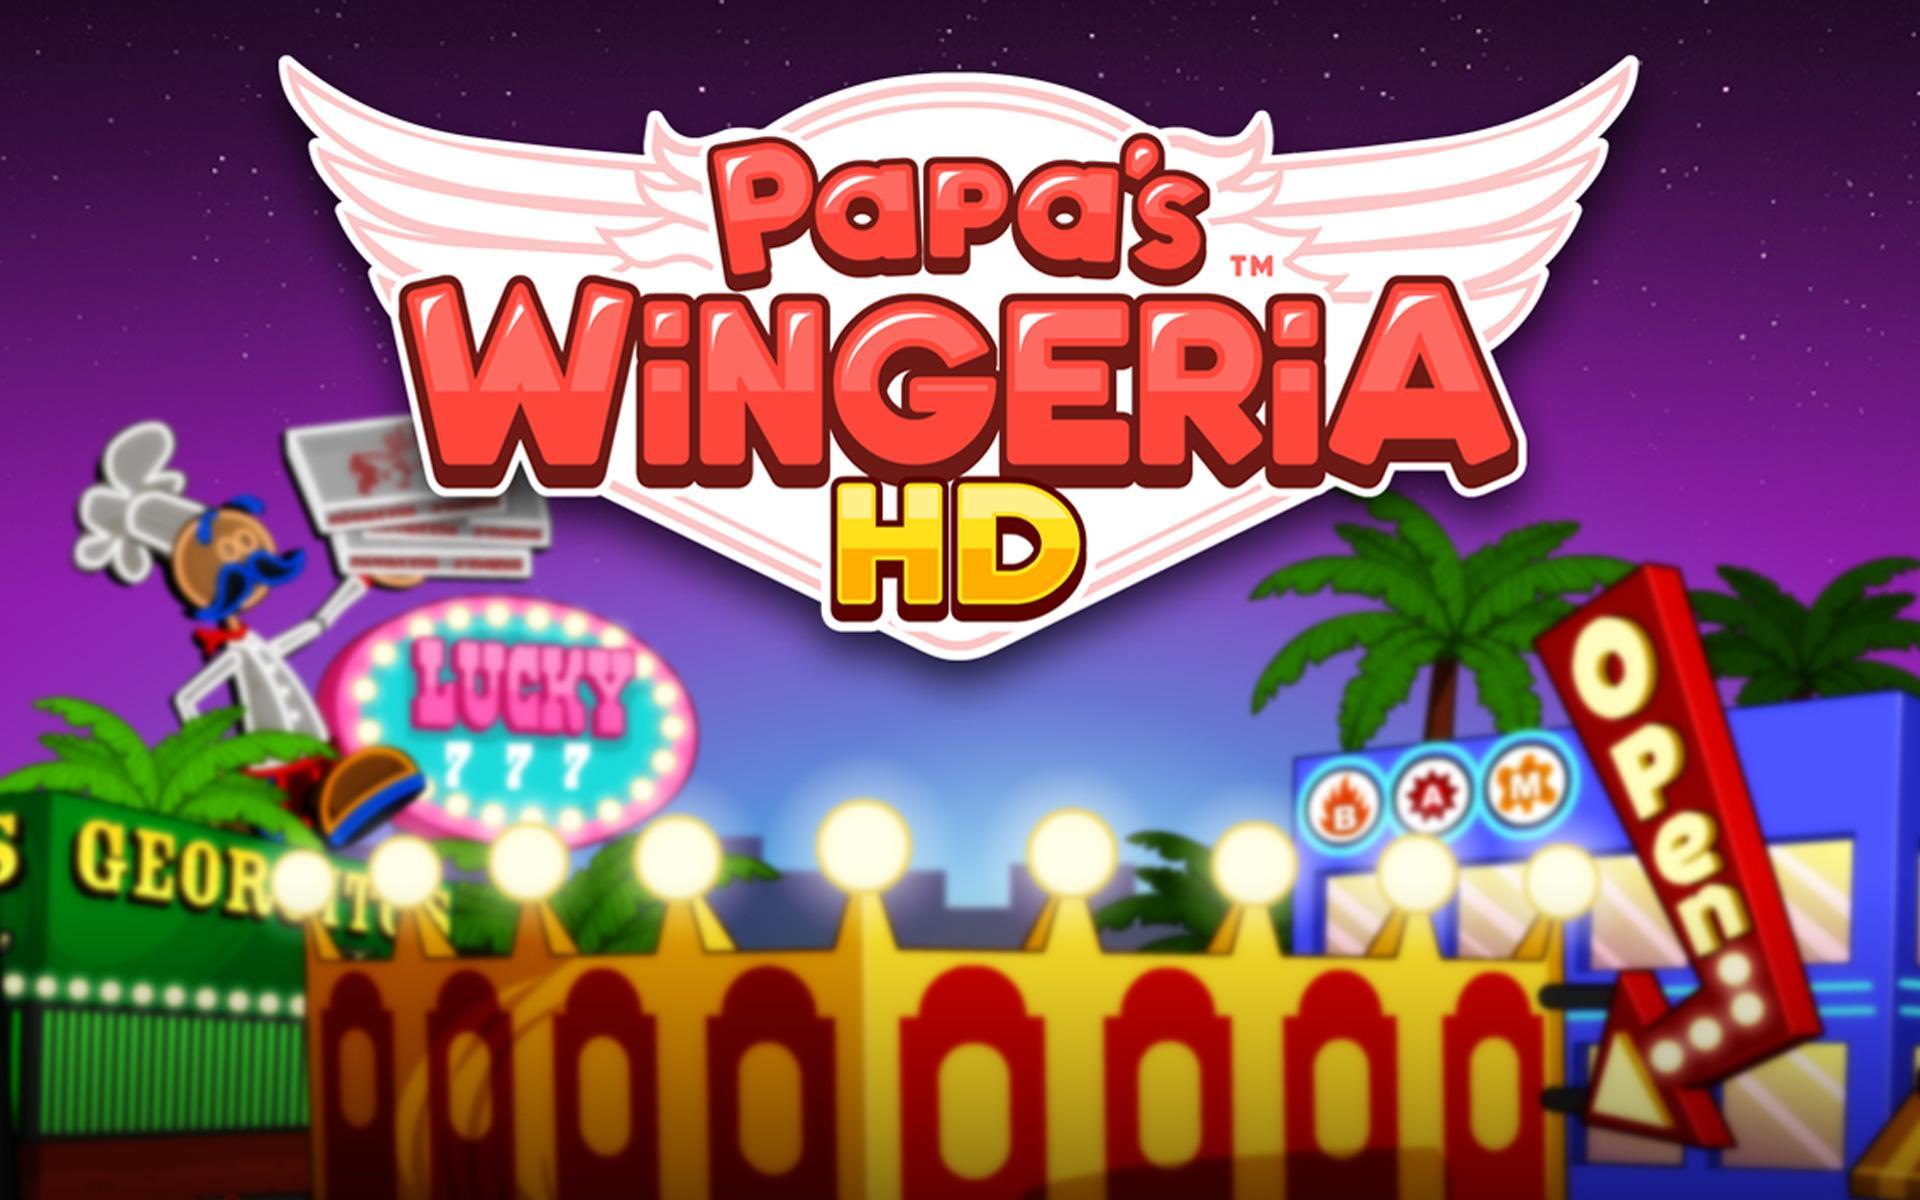 Screenshot 1 of Wingeria ของ Papa HD 